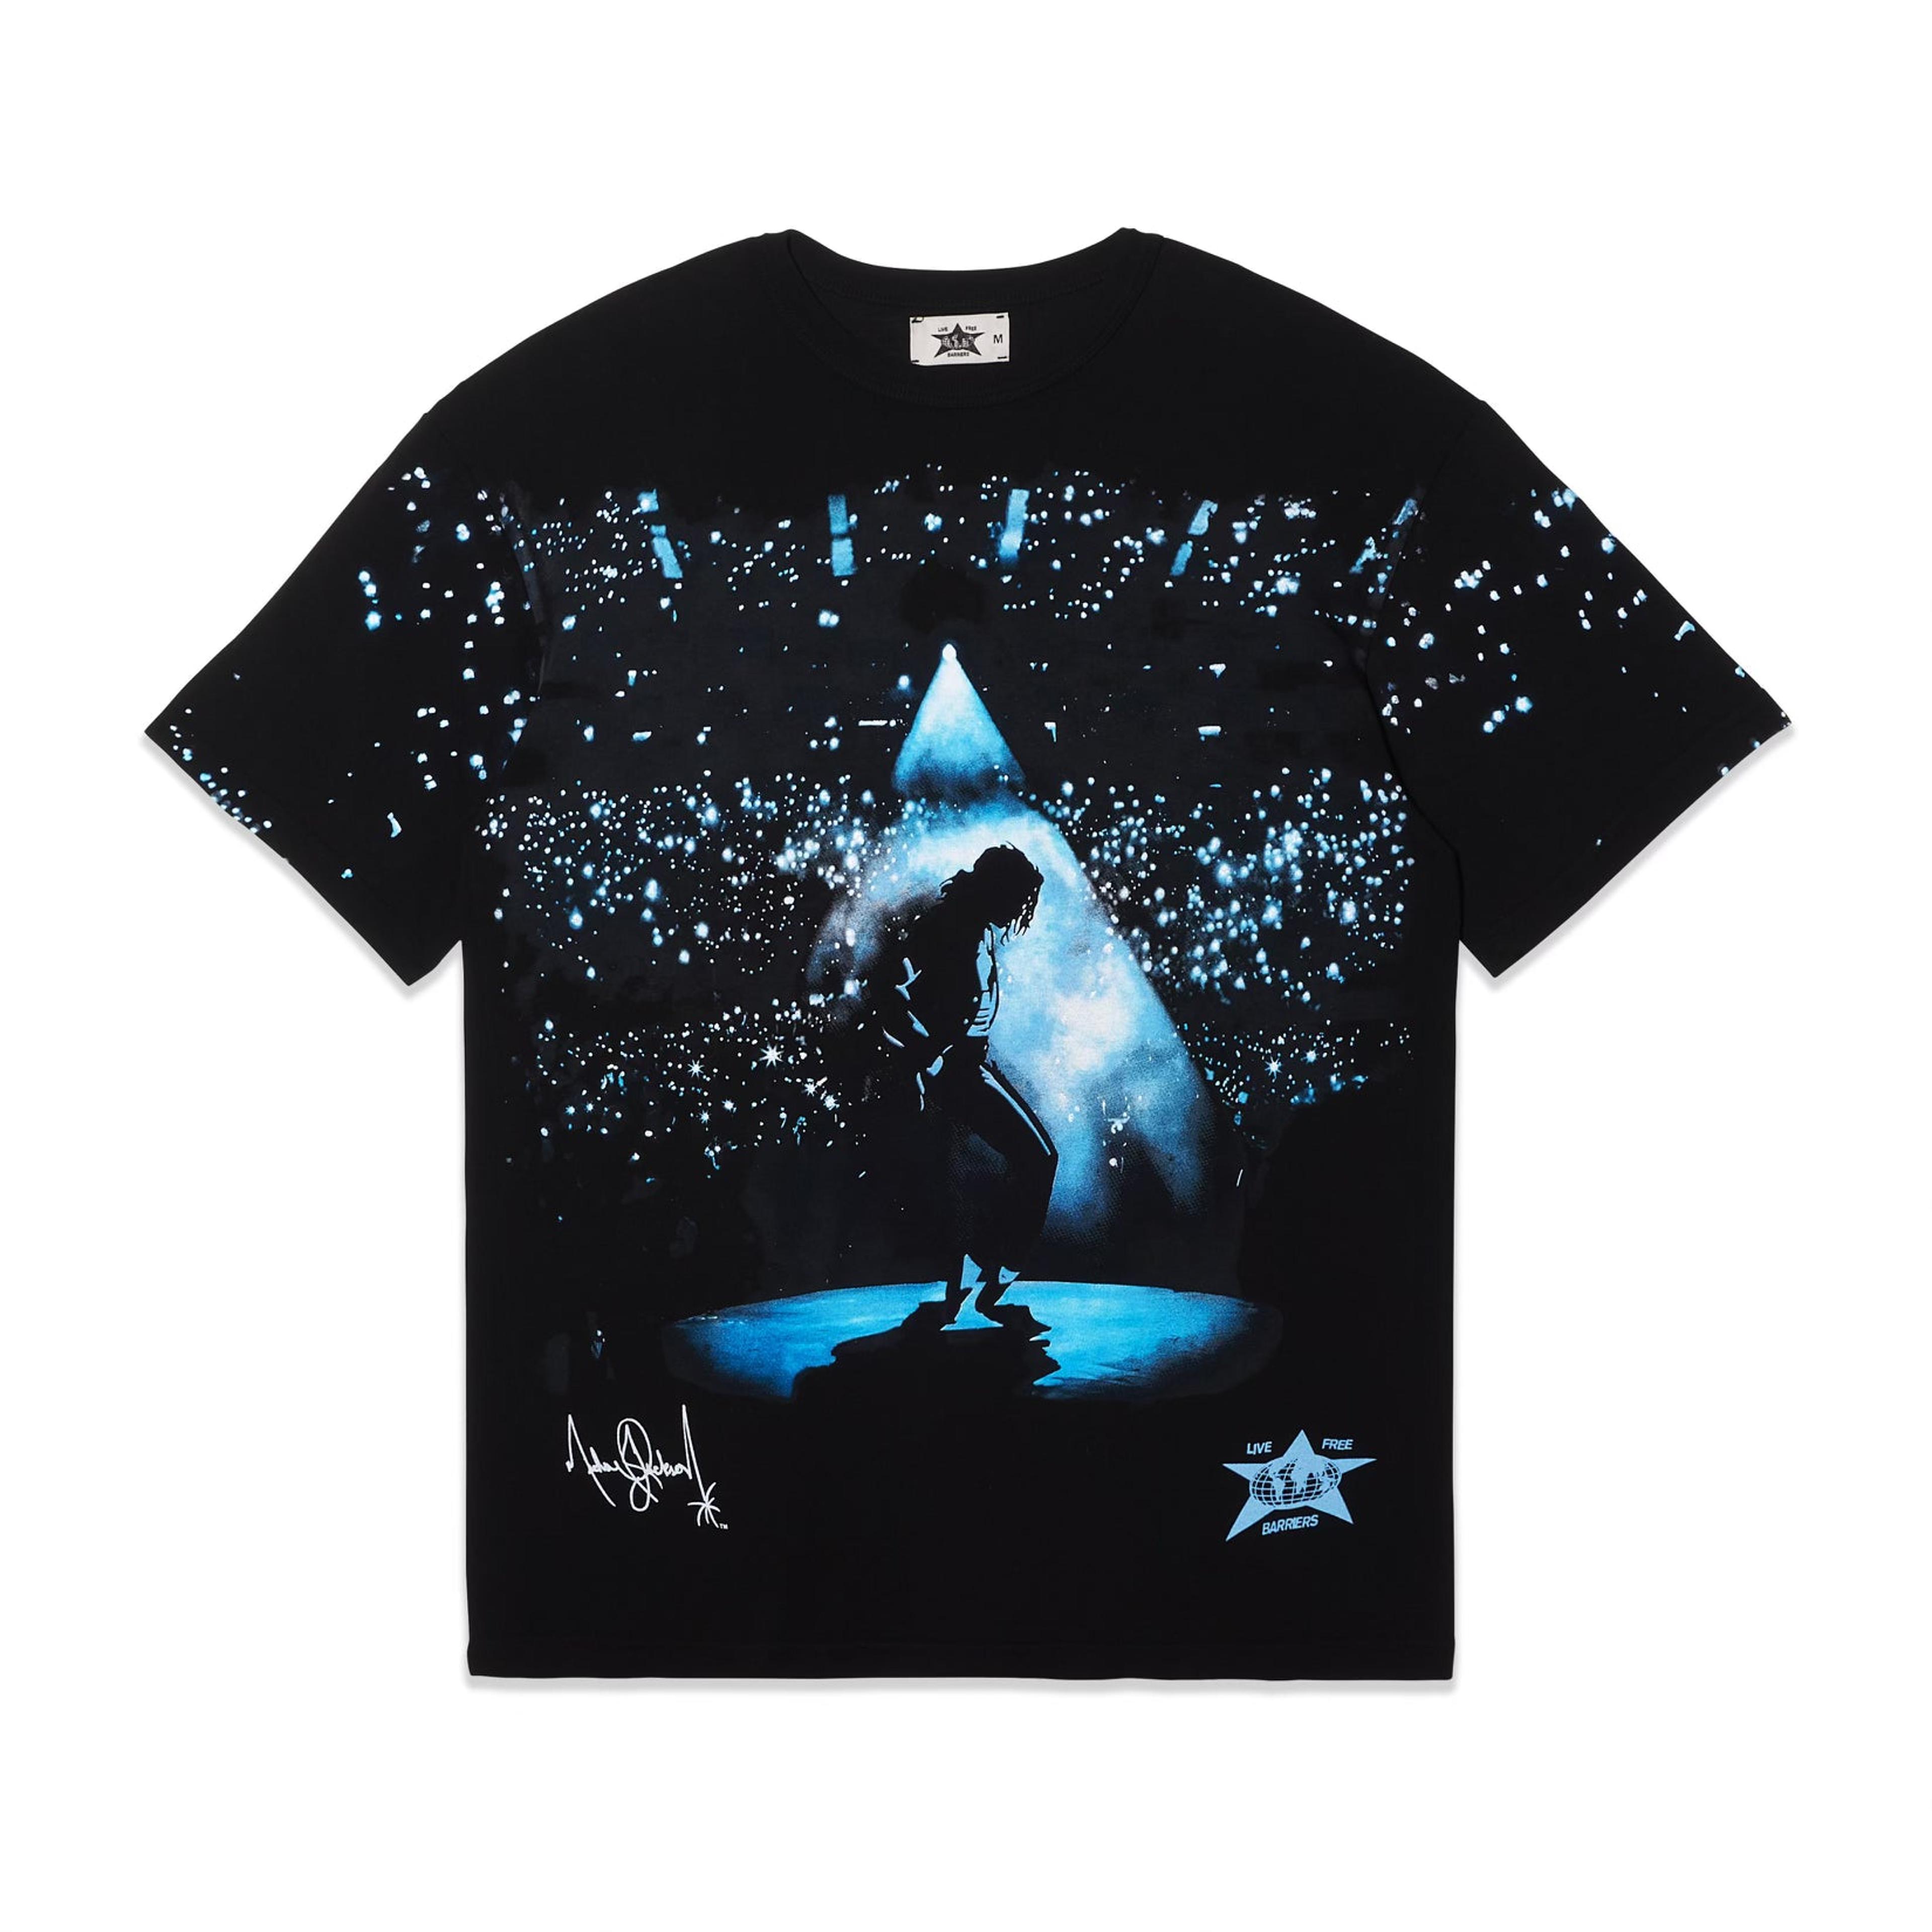 Michael Jackson “Moonwalk” T-shirt